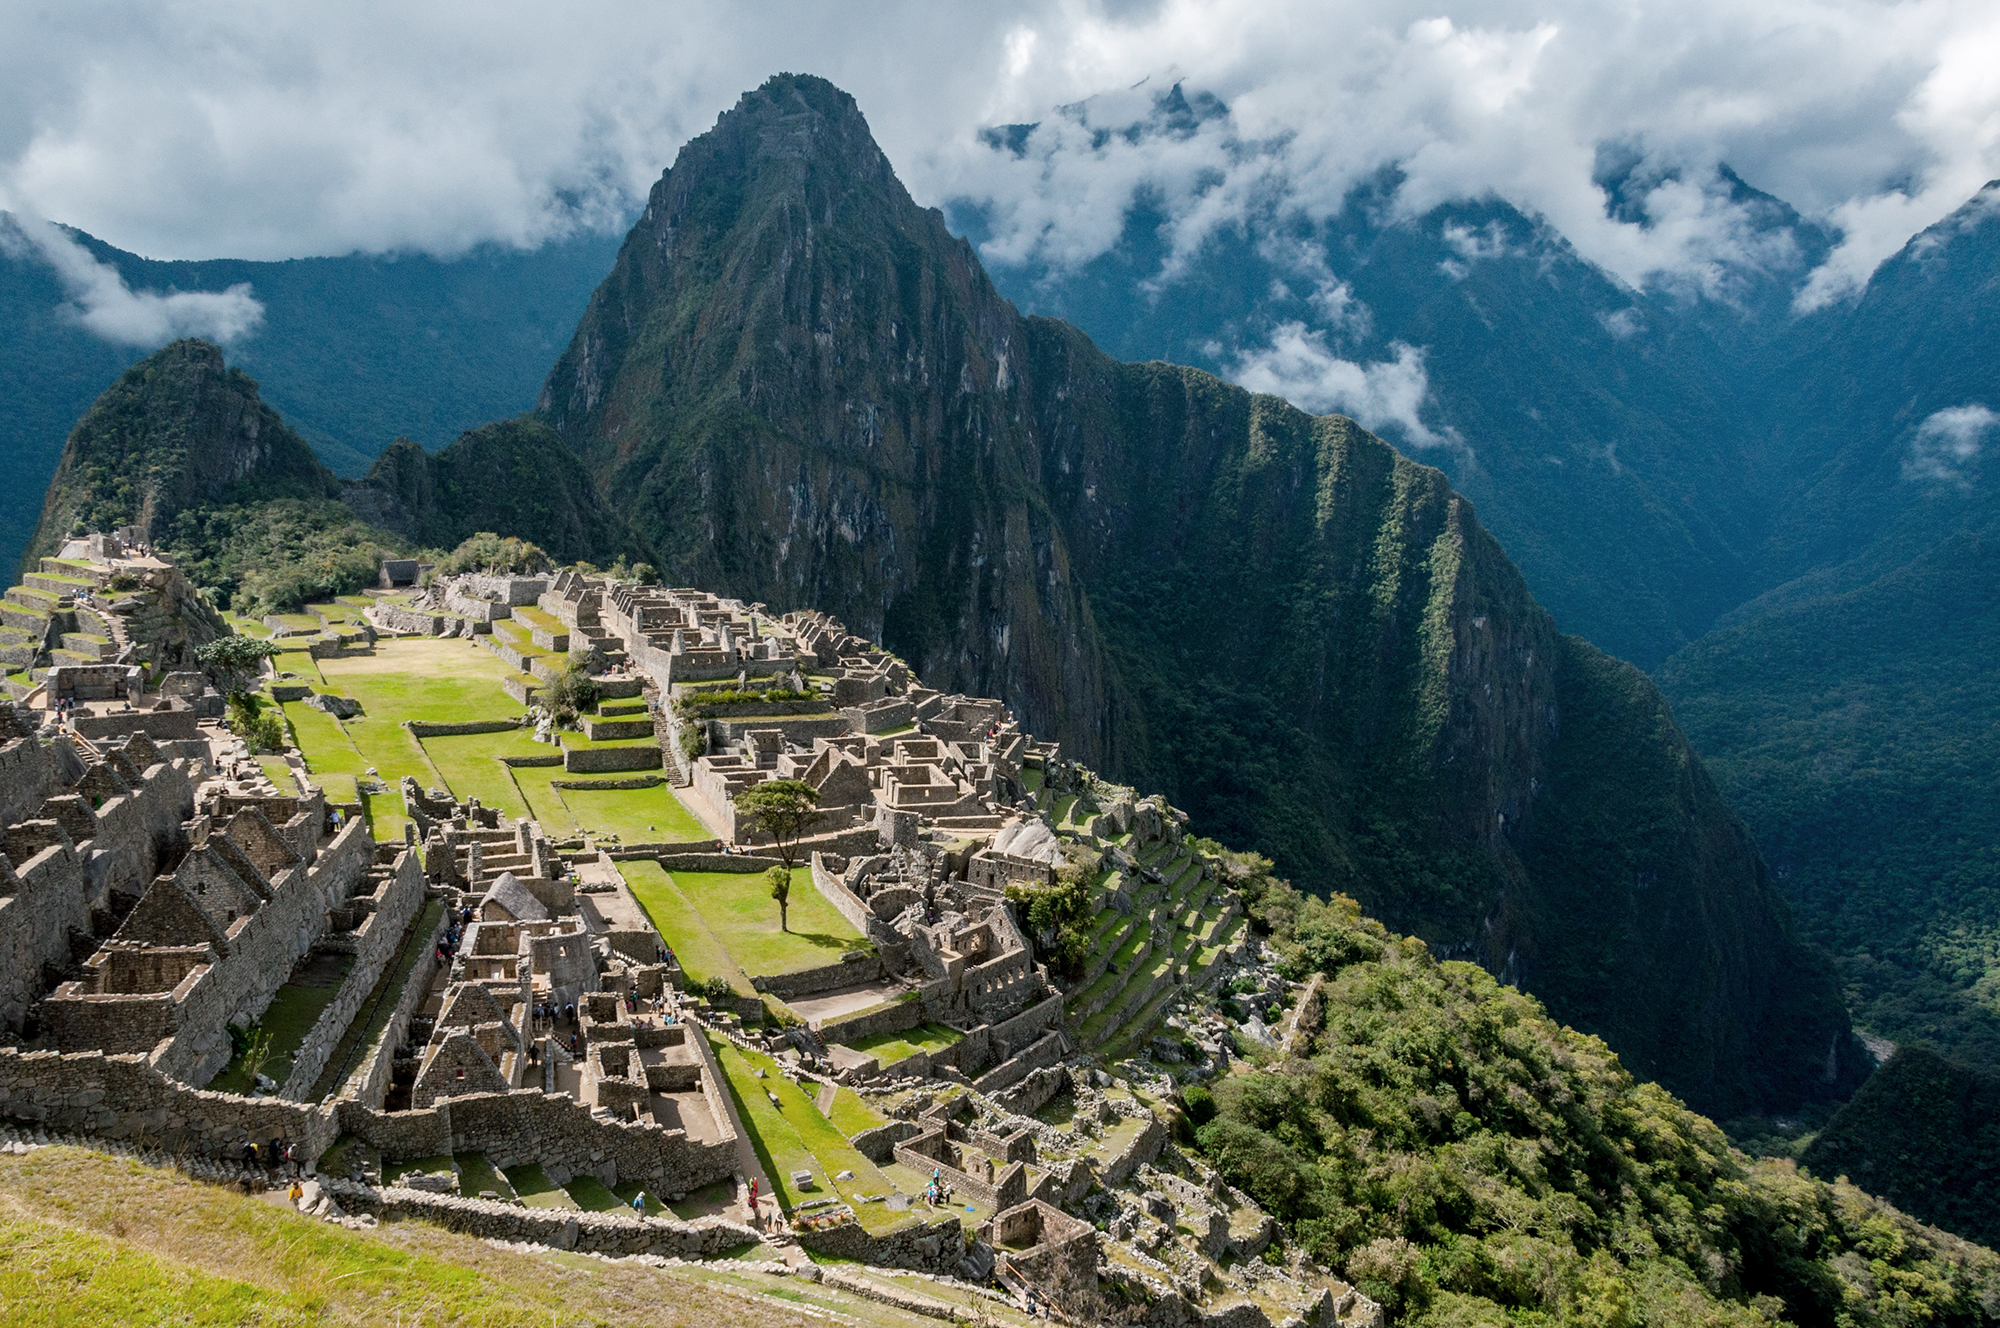 A bird's eye view of the breathtaking mountain Machu Picchu in Peru